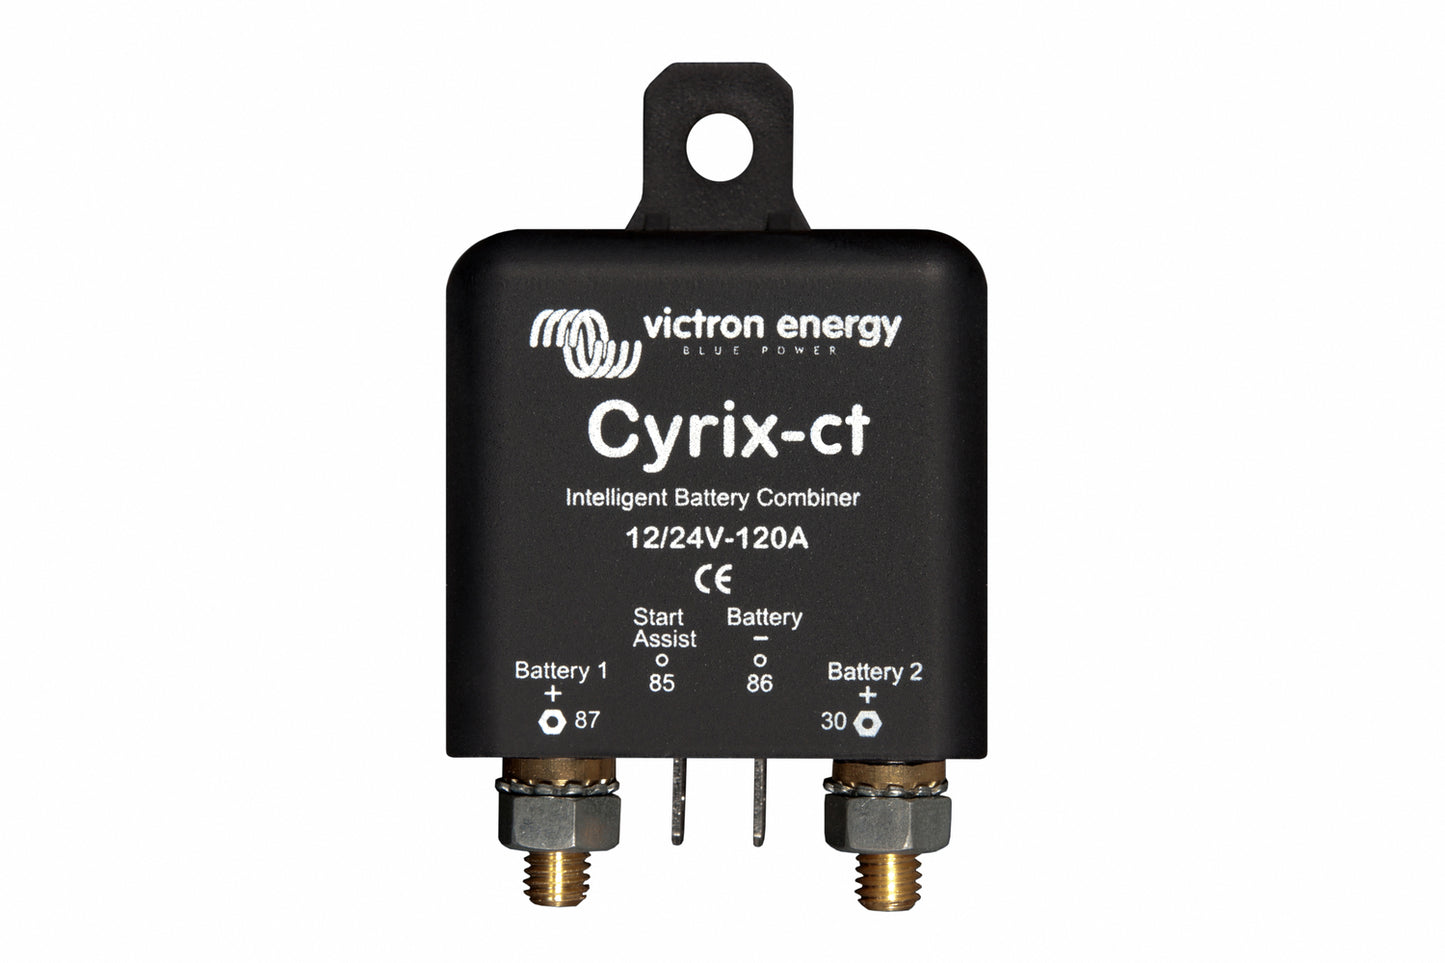 Cyrix-ct Intelligent Battery Combiner